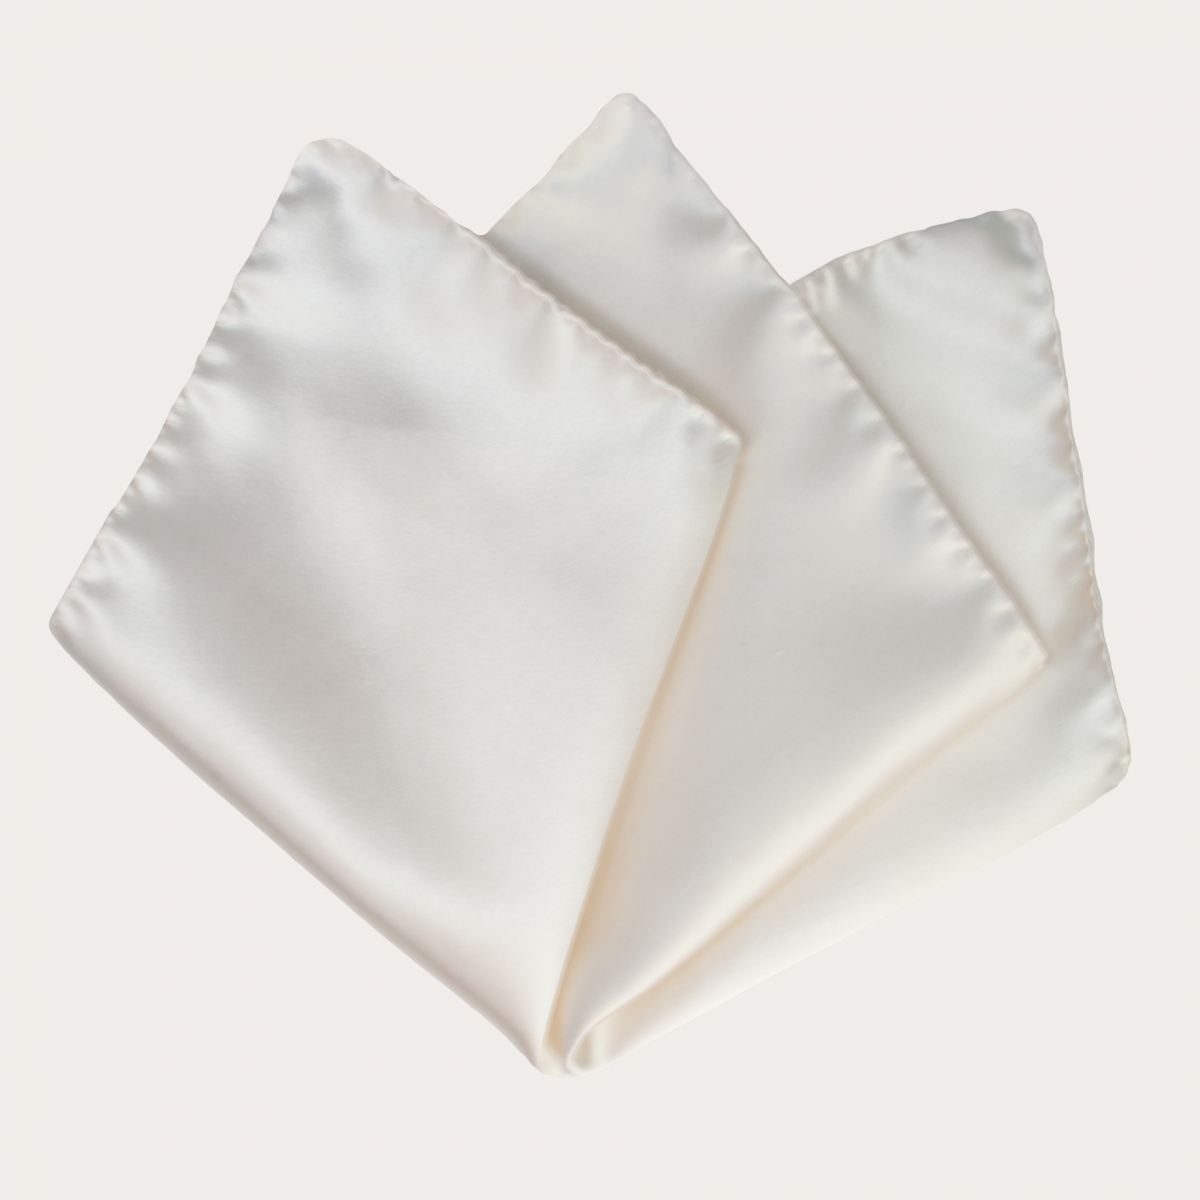 BRUCLE Wedding set in silk satin, white tie and pocket handkerchief